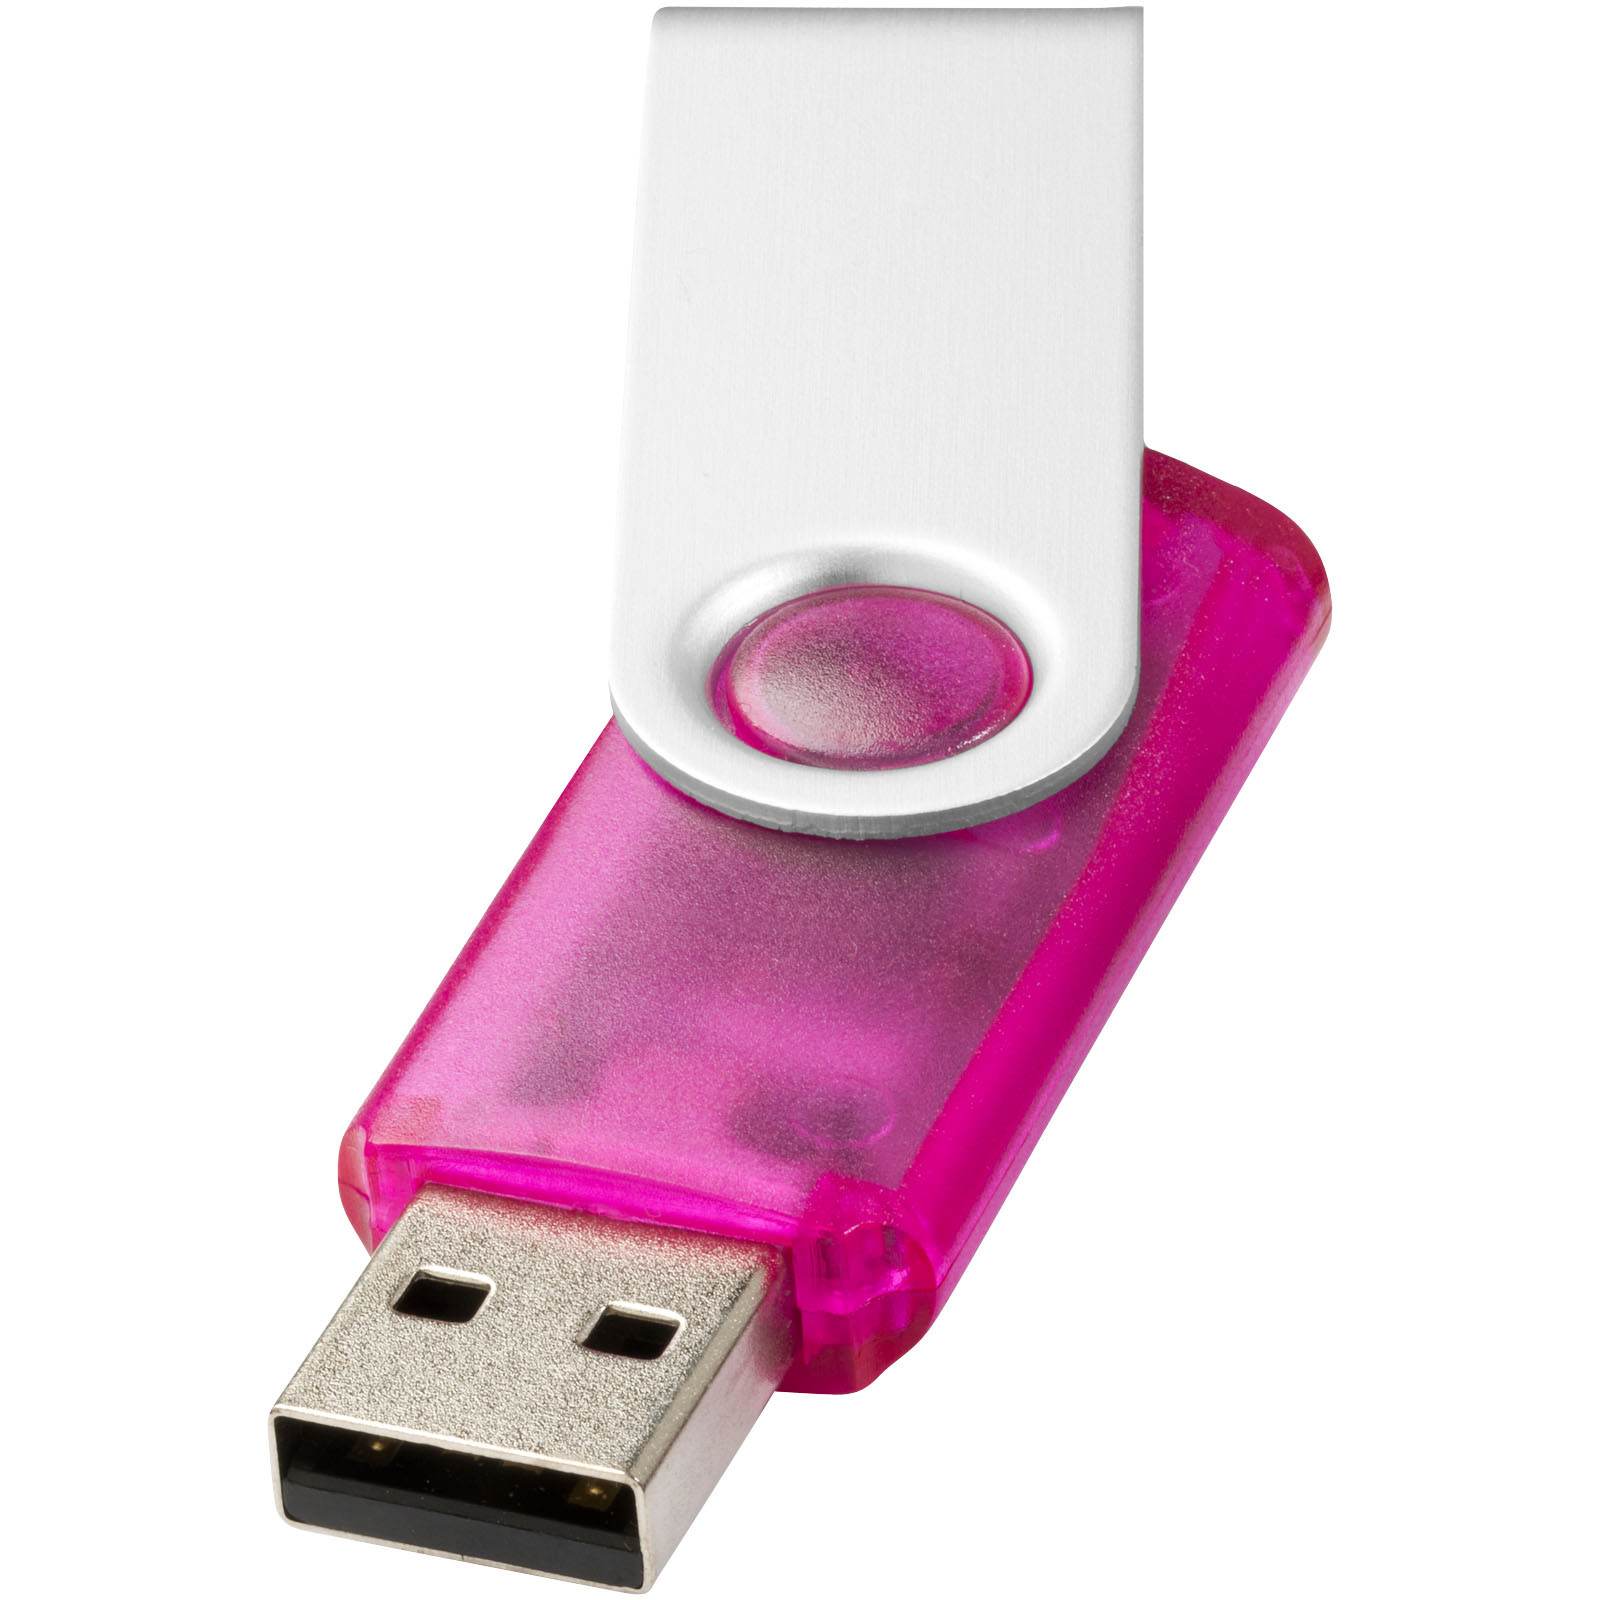 Rotating translucent 4GB USB flash drive - Keith